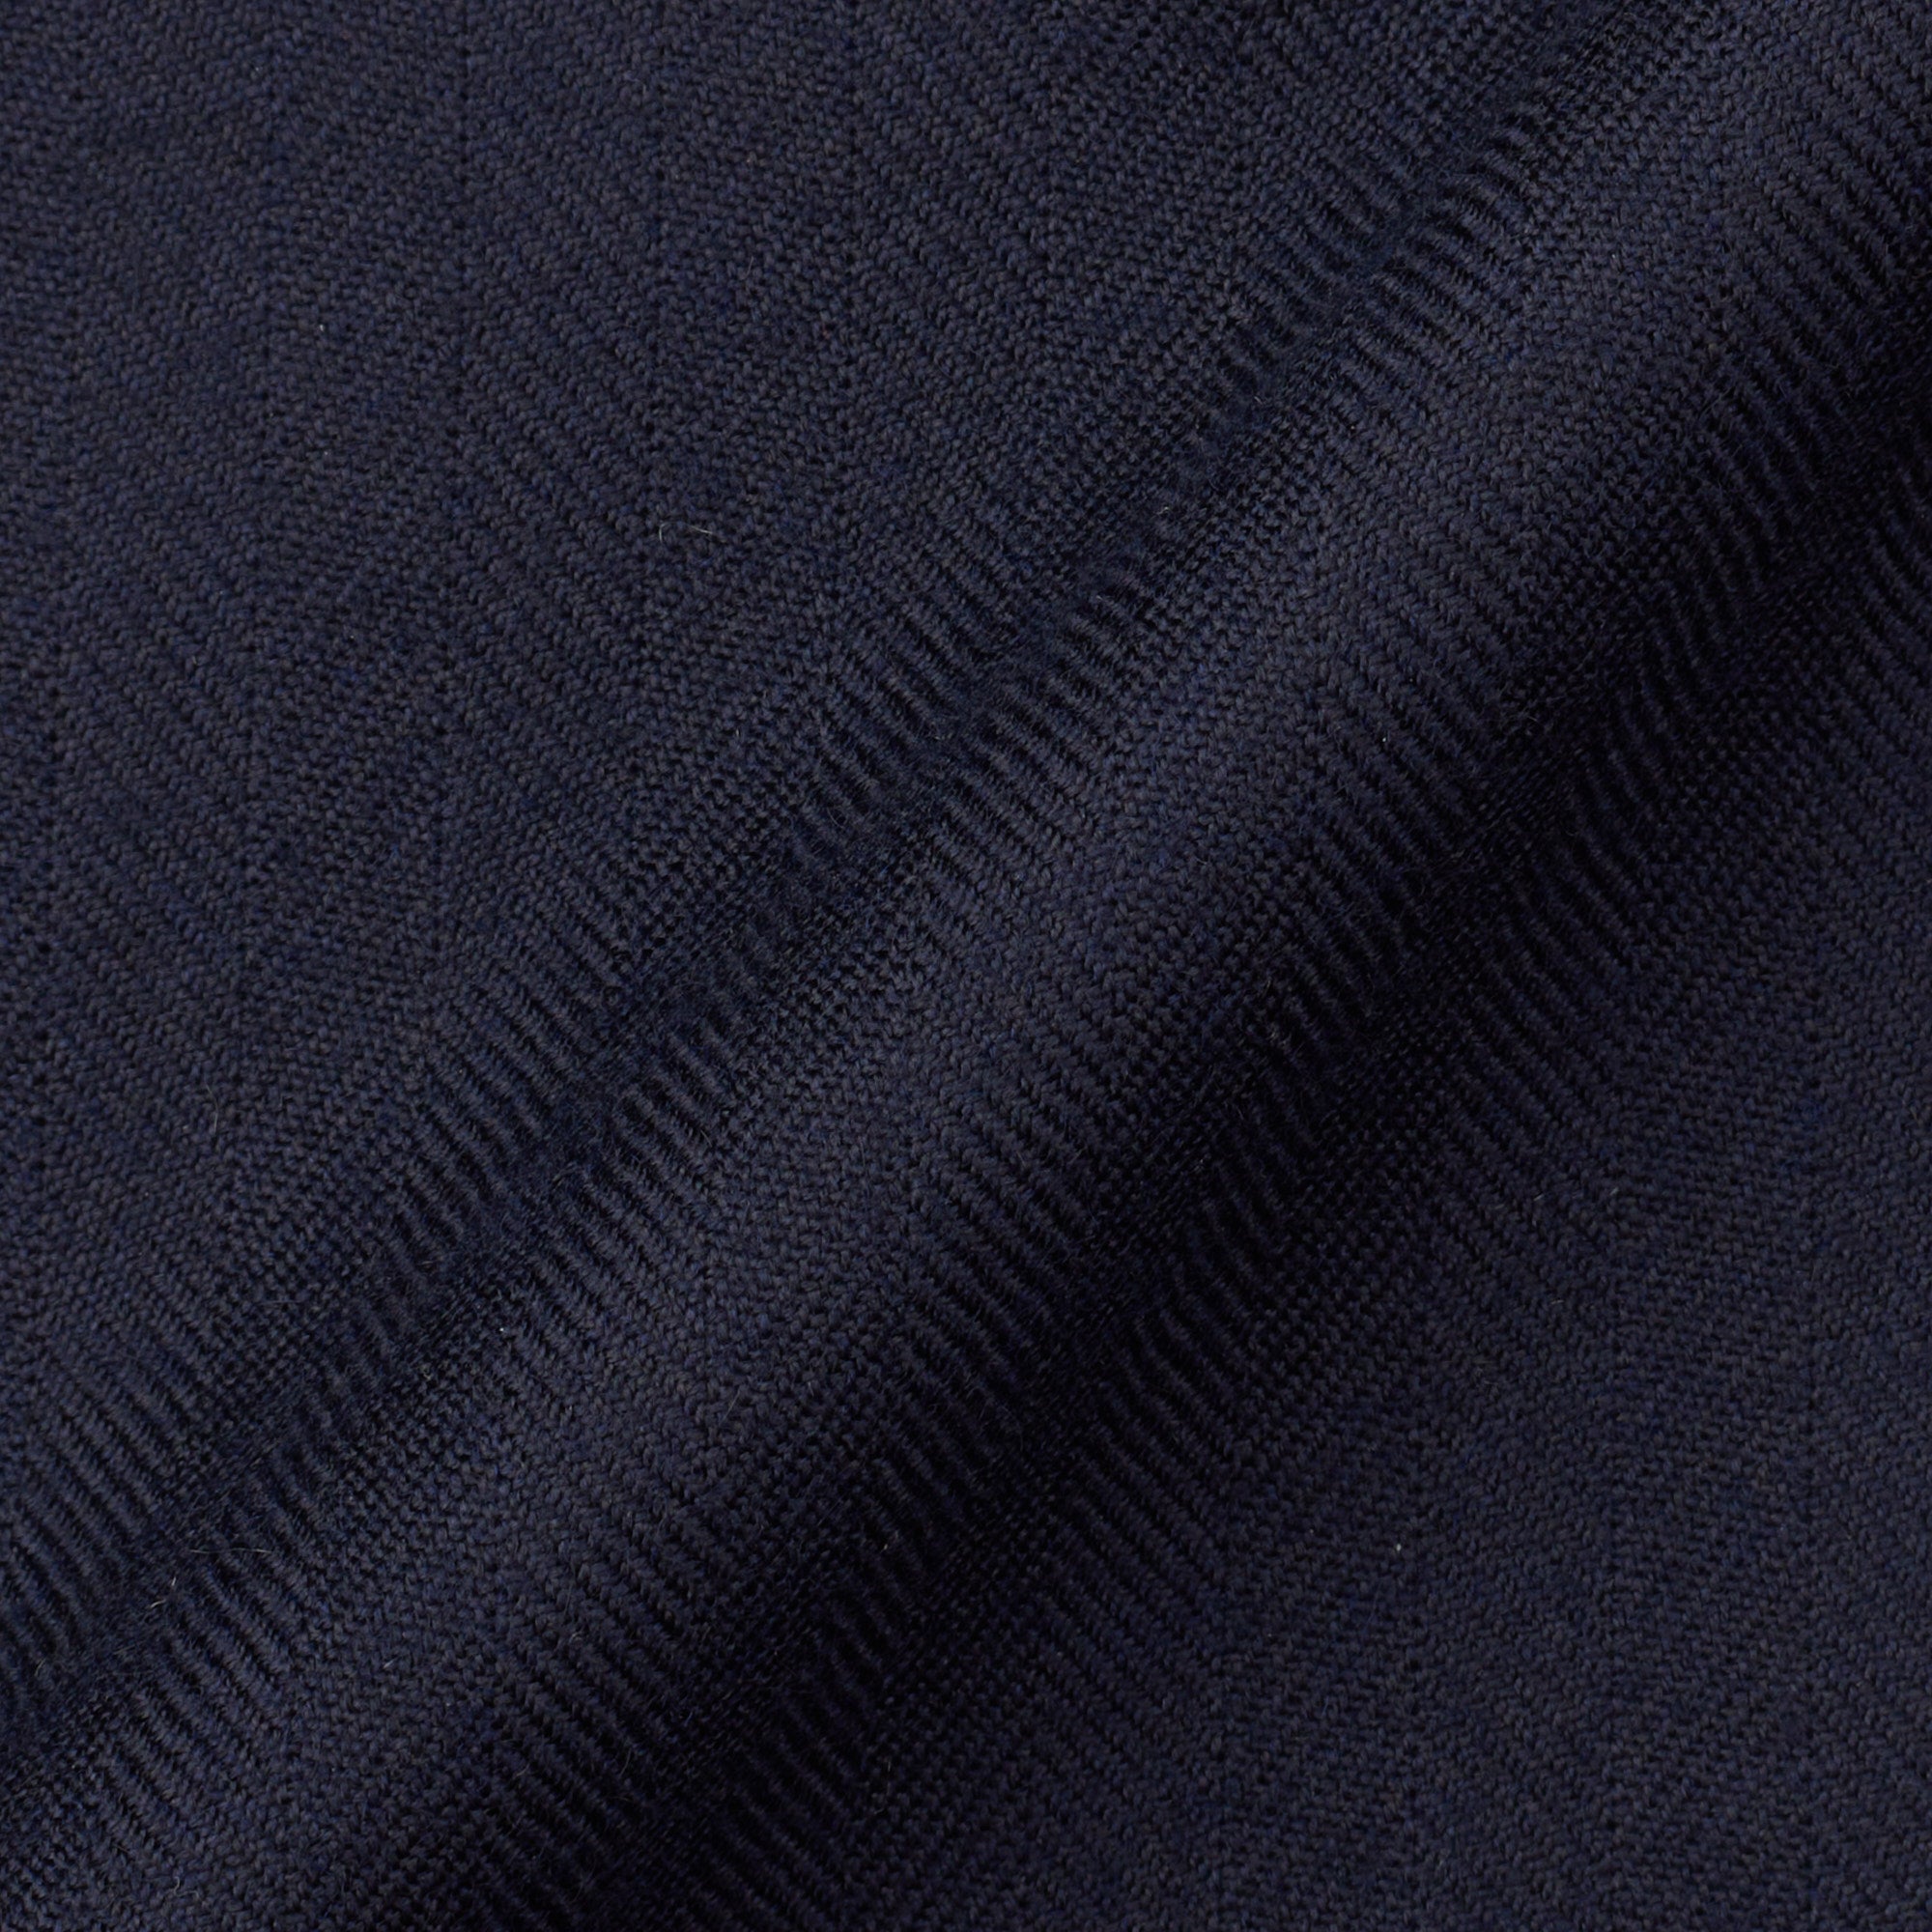 RUBINACCI LH Handmade Bespoke Navy Blue Herringbone Cashmere DB Jacket 50 US 40